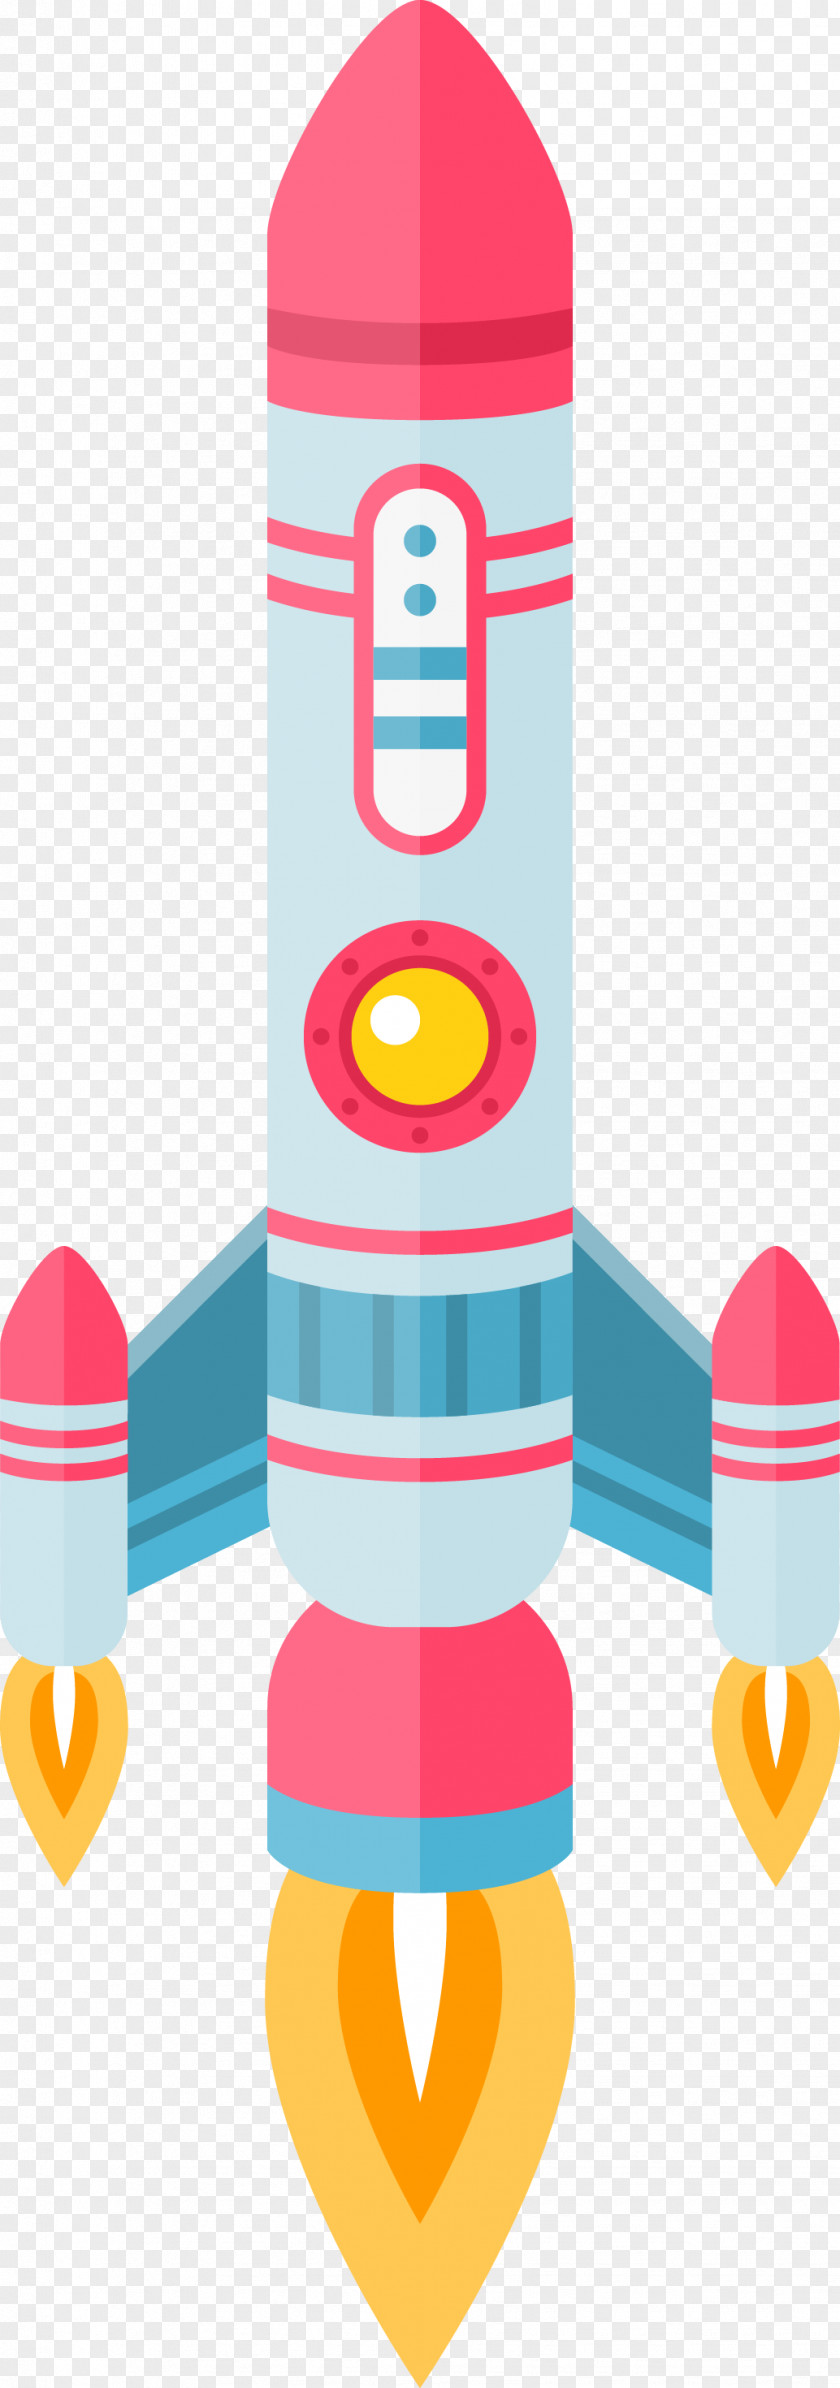 Manned Spaceship Spacecraft Rocket Icon PNG